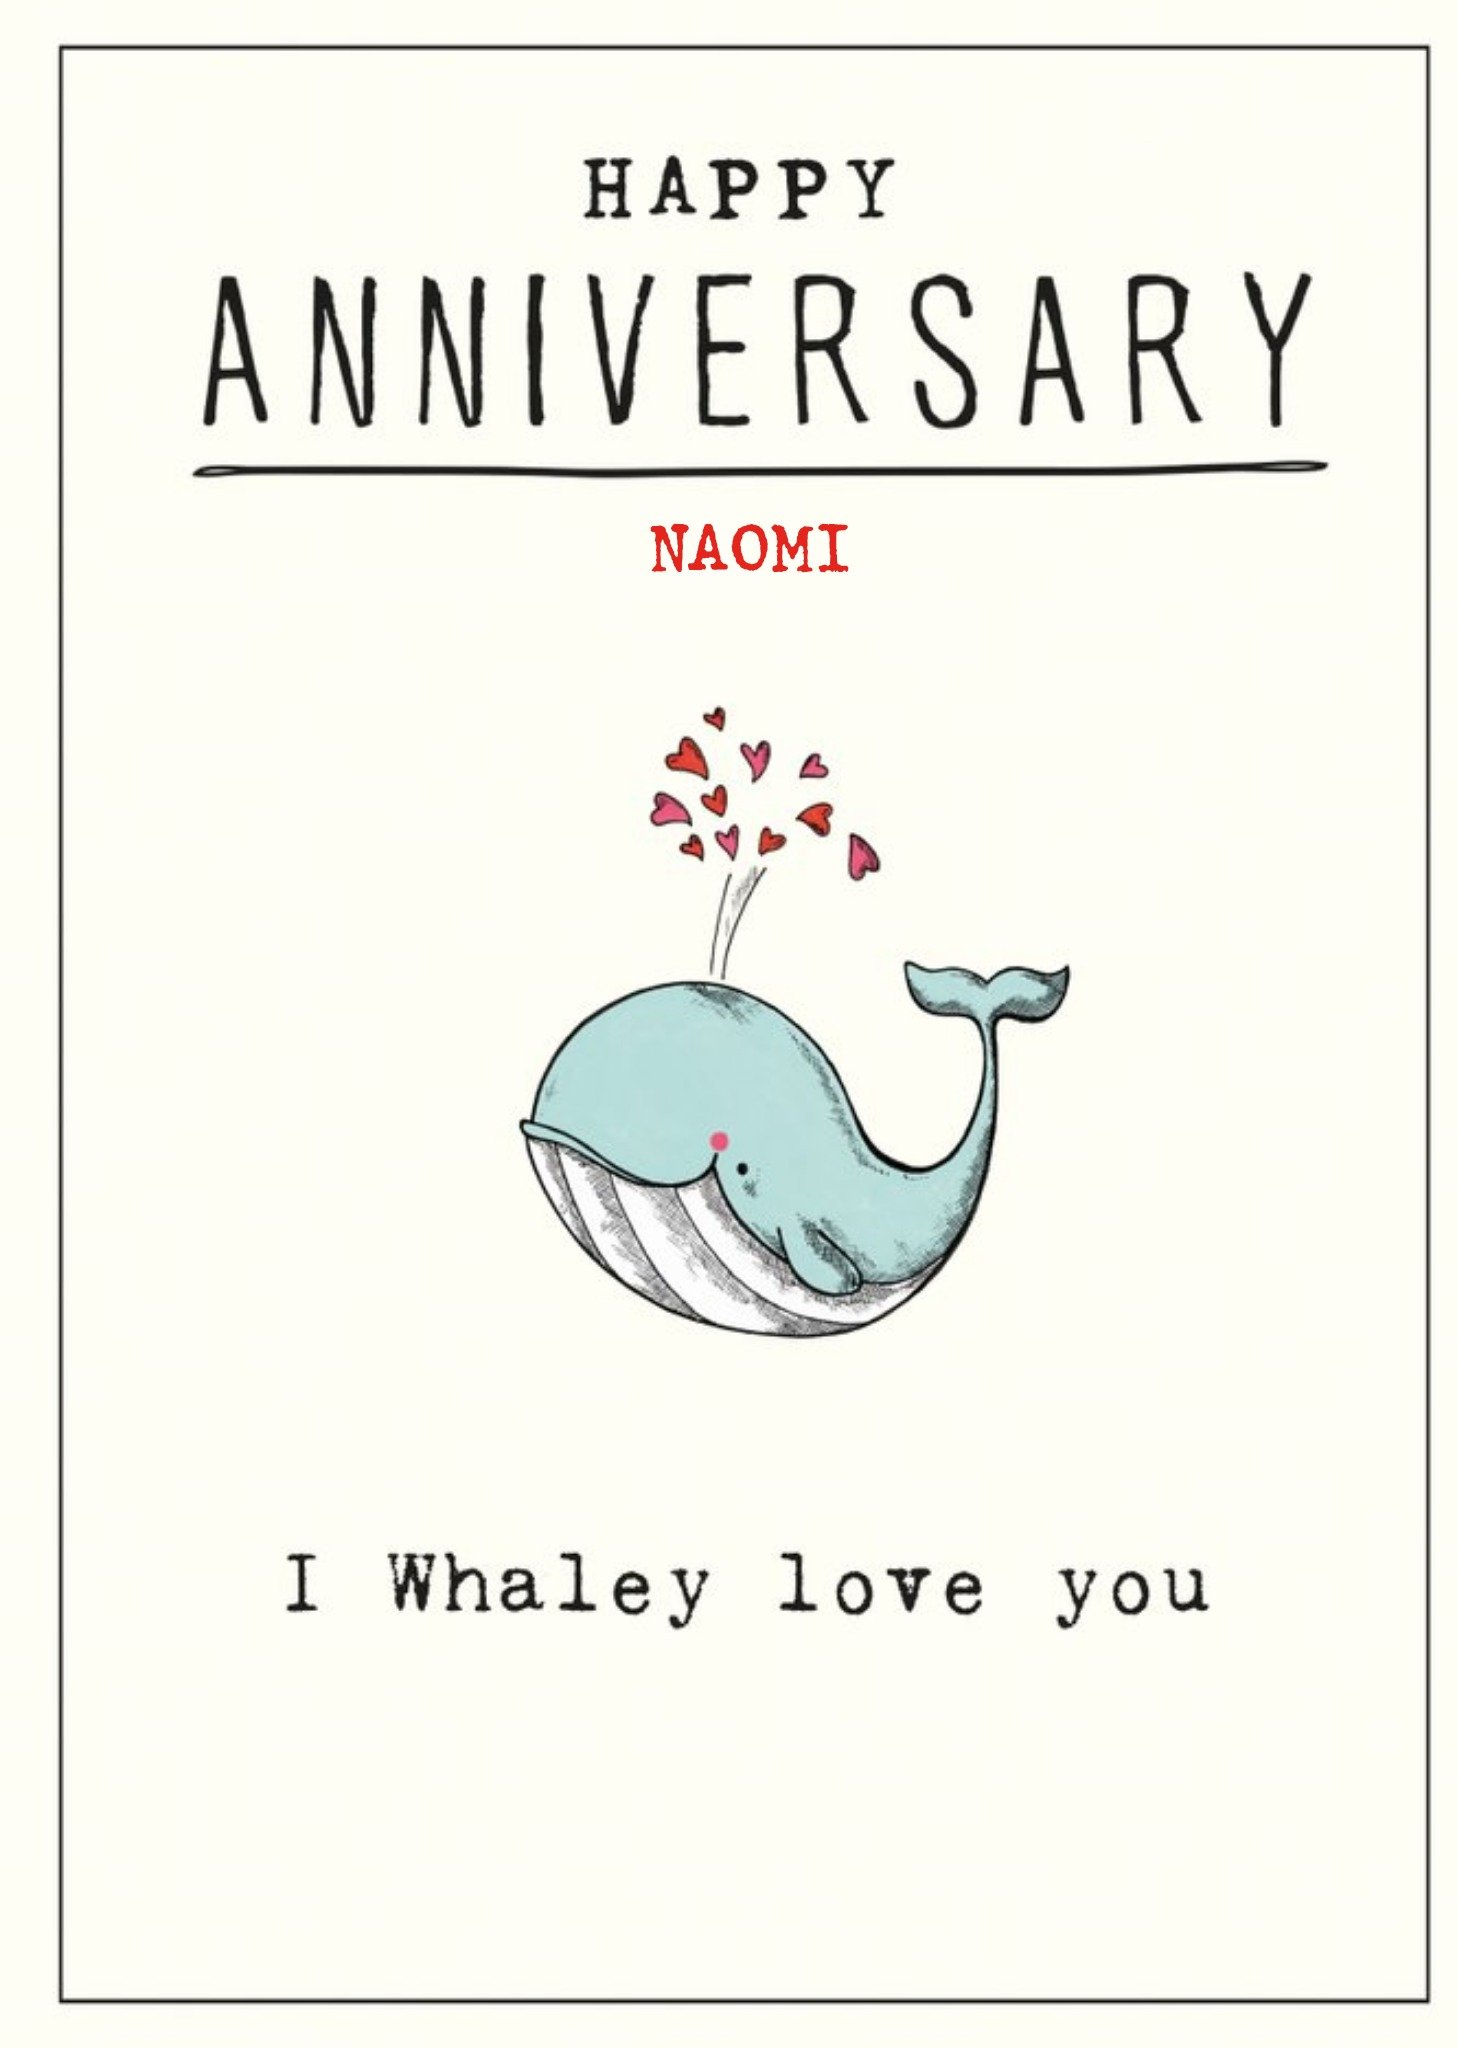 Moonpig Humorous Illustrative Love Hearts & Whale Anniversary Card Ecard